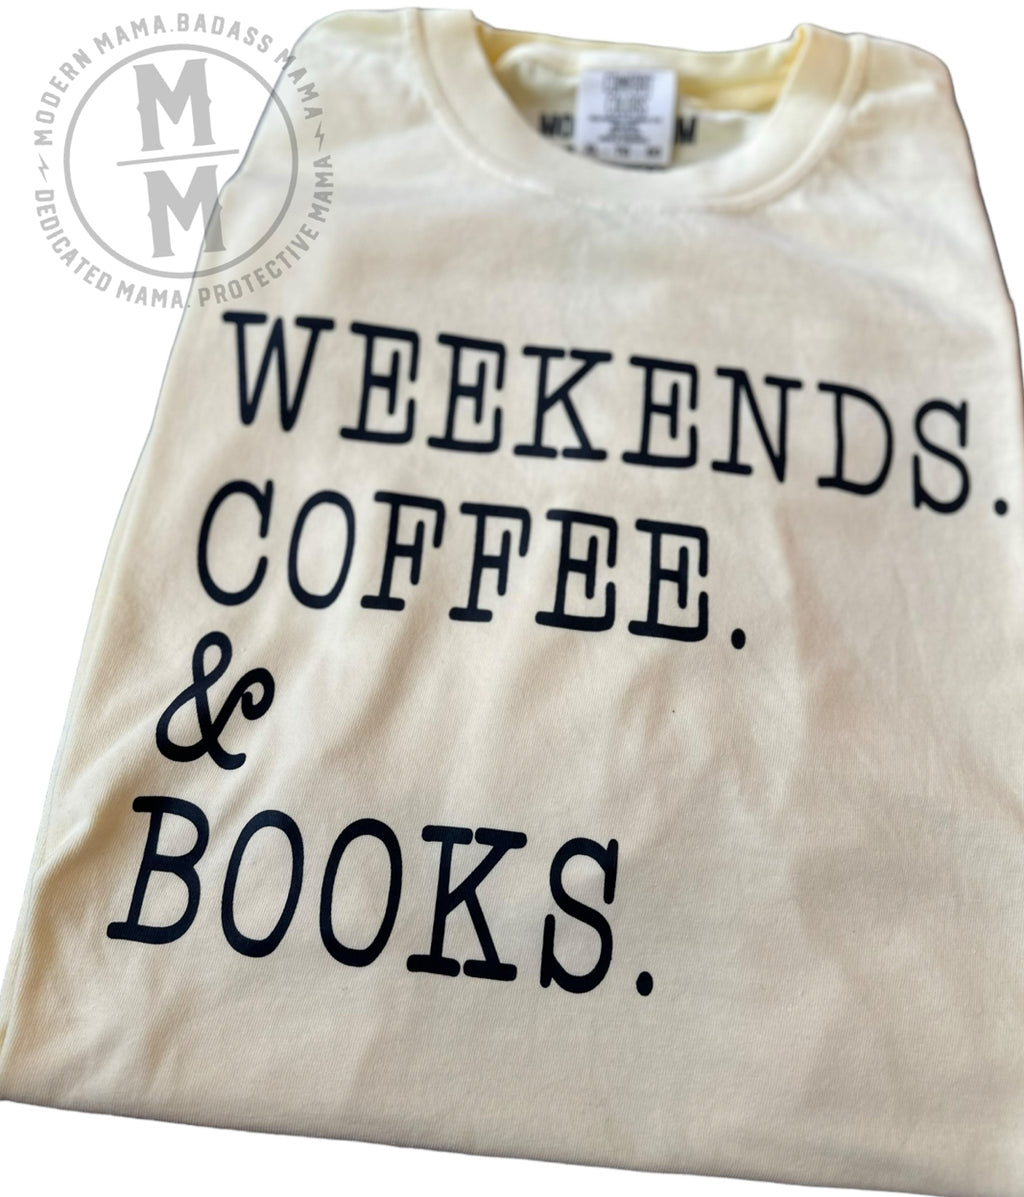 Weekend. Coffee. Books.